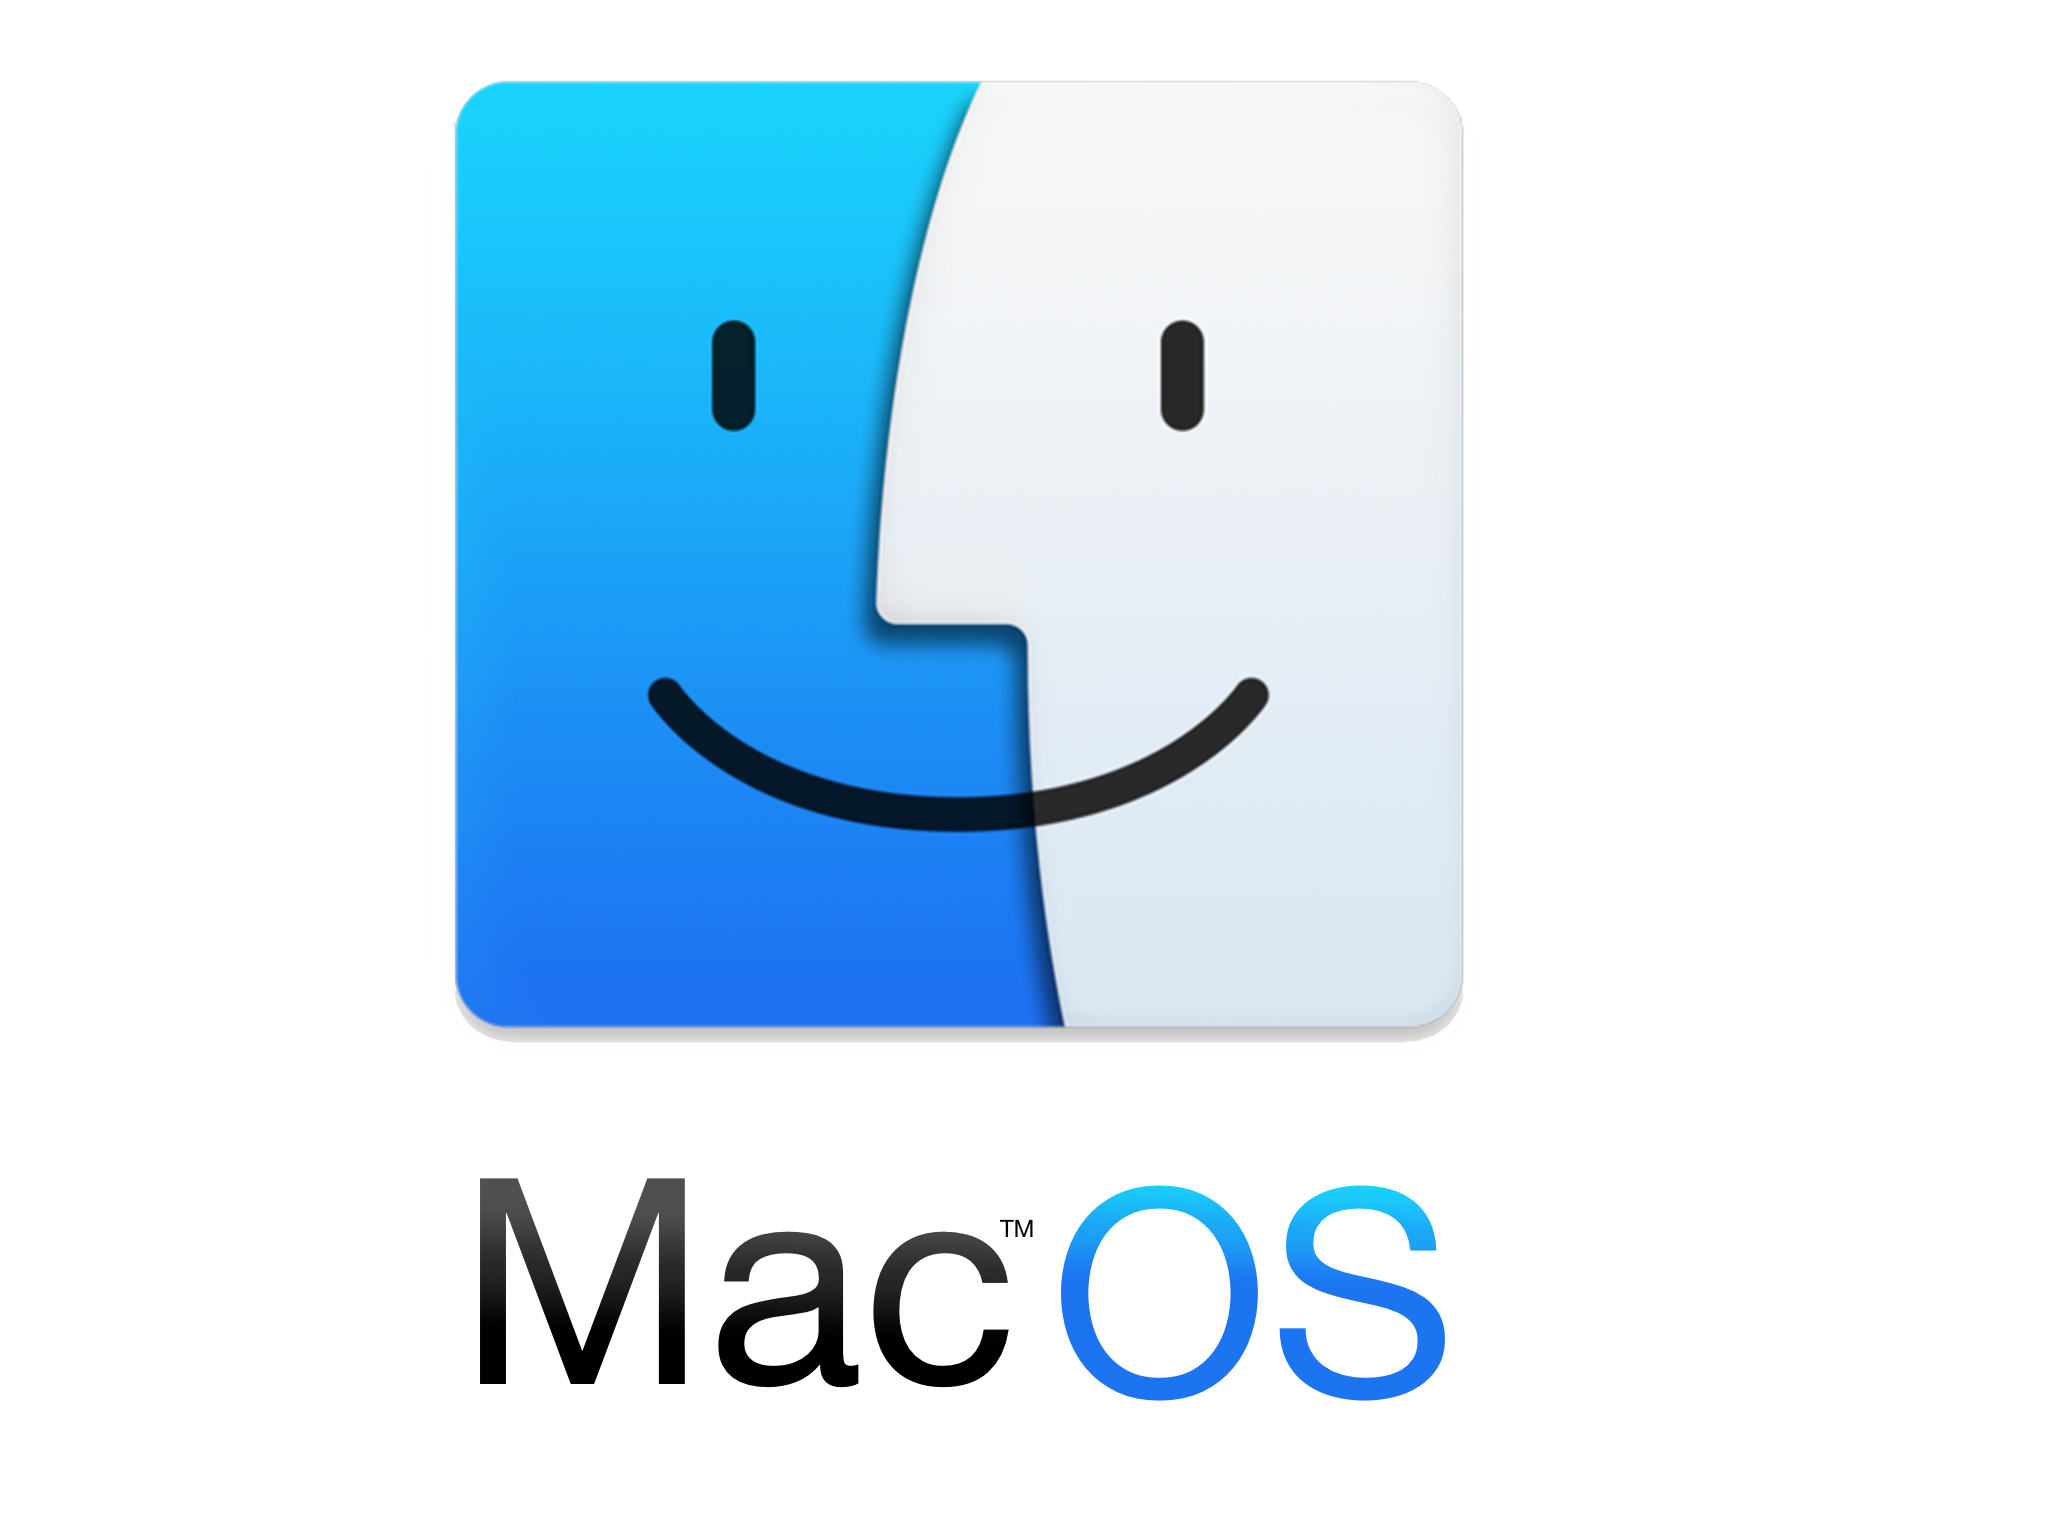 Original MacOS logo Redesigned by Zapper3 on DeviantArt